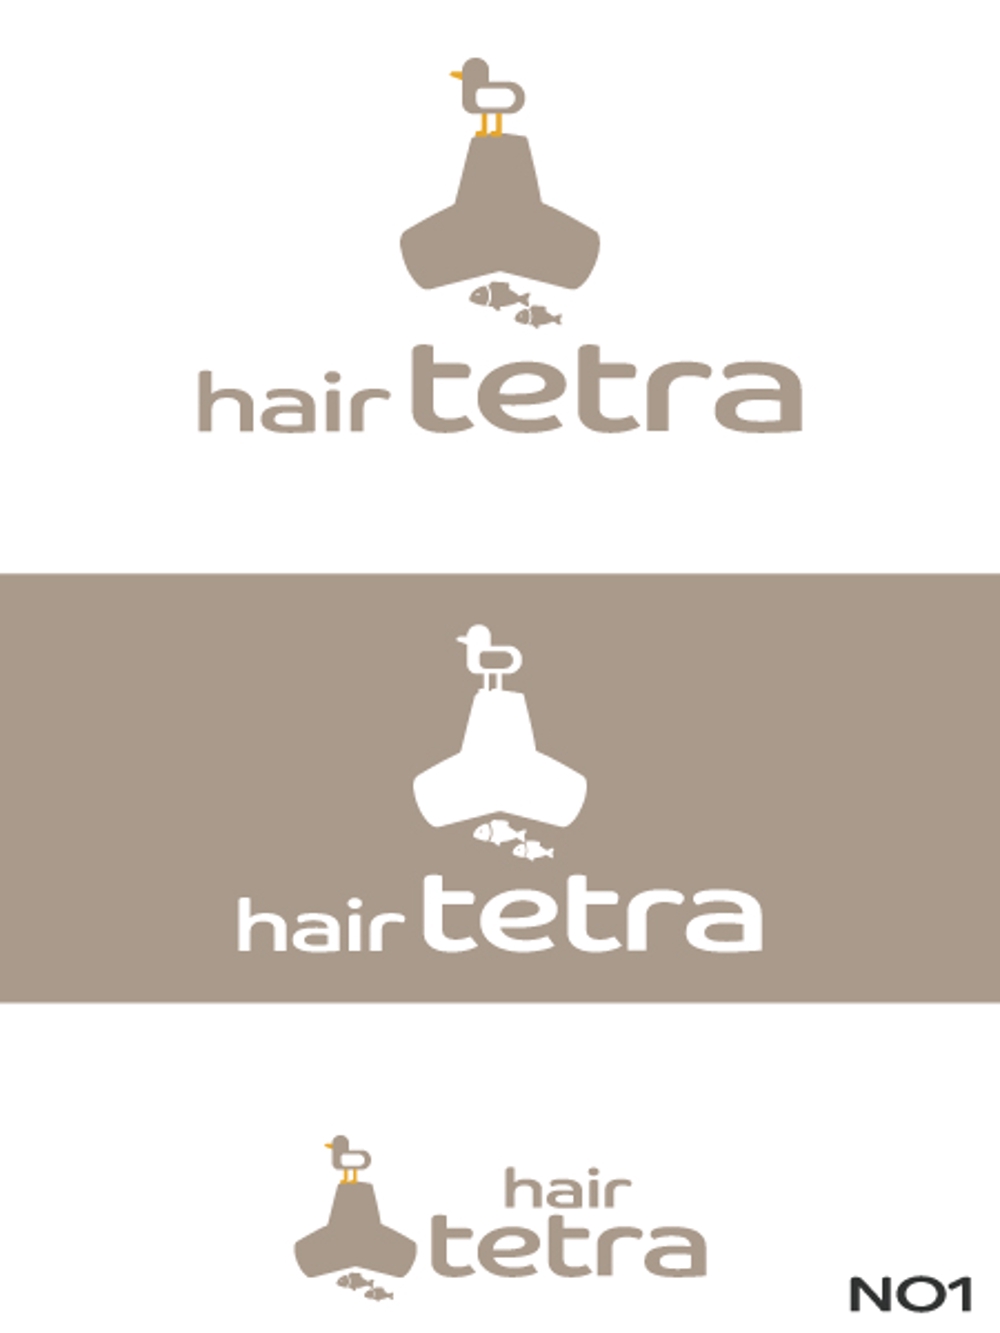 hair-tetra-3-1.jpg